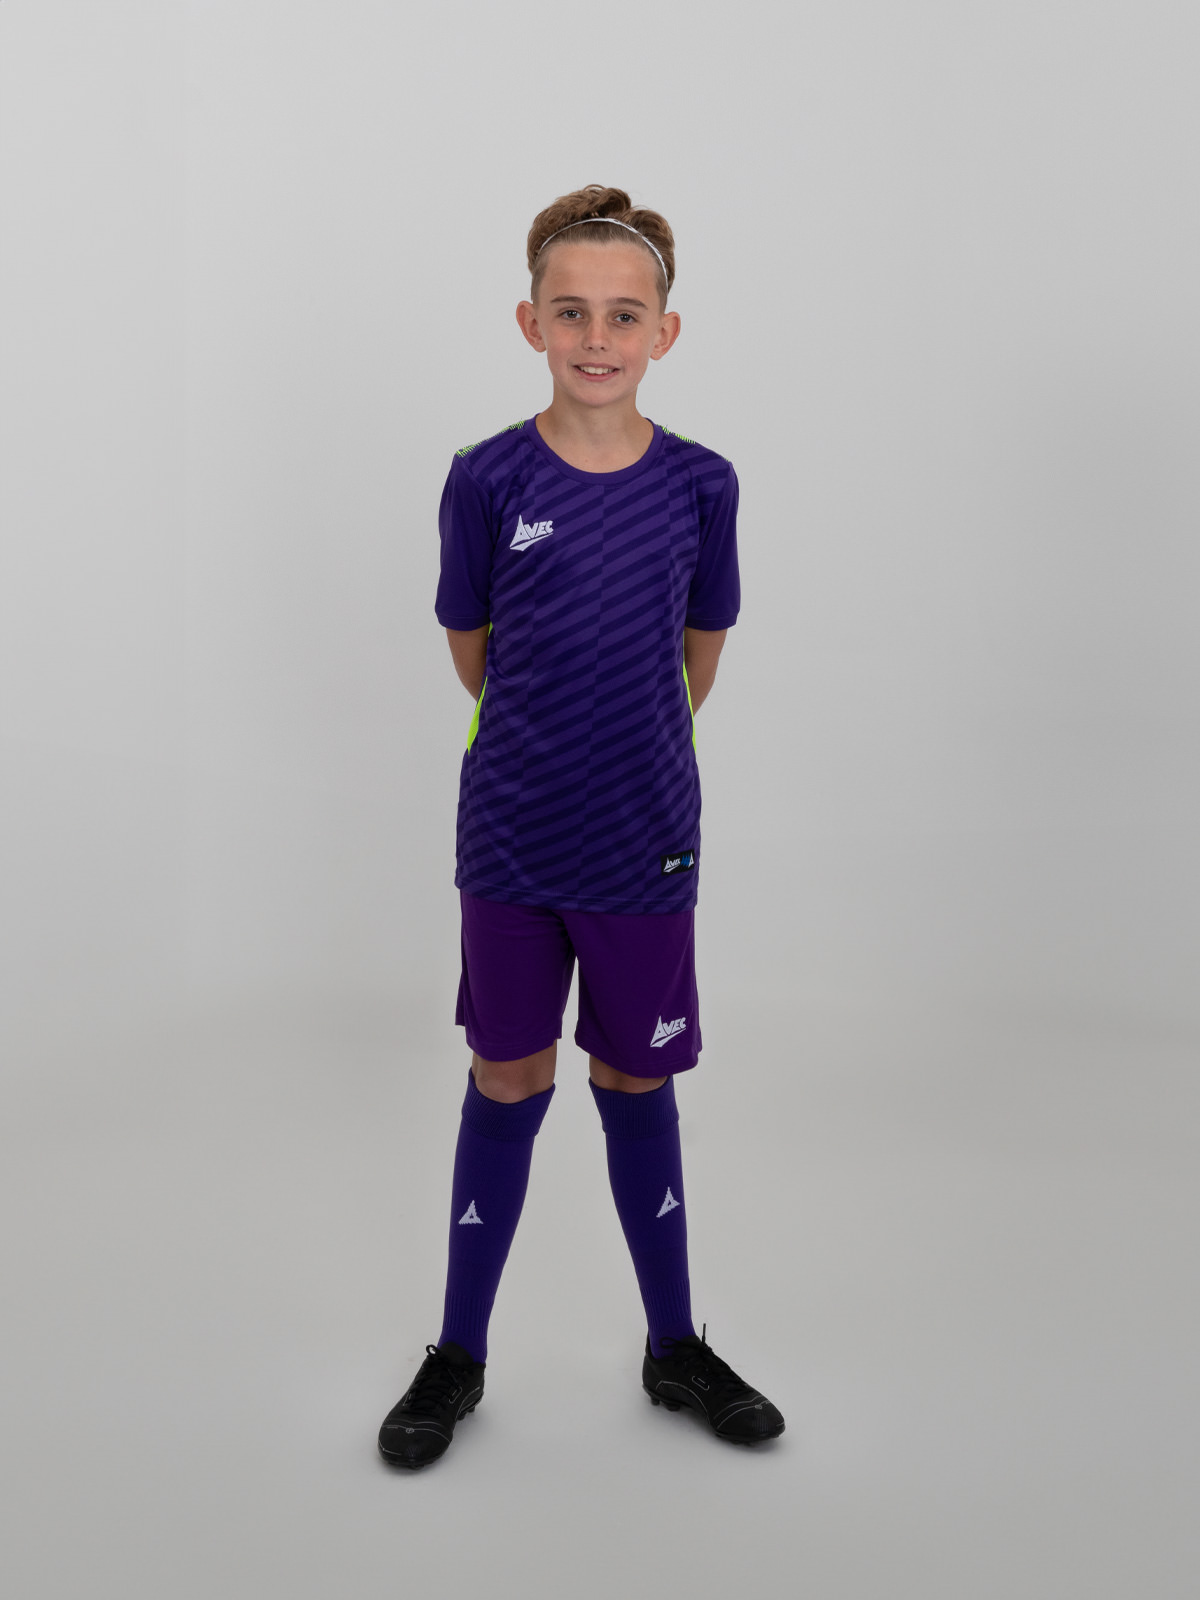 a full childs purple football kit